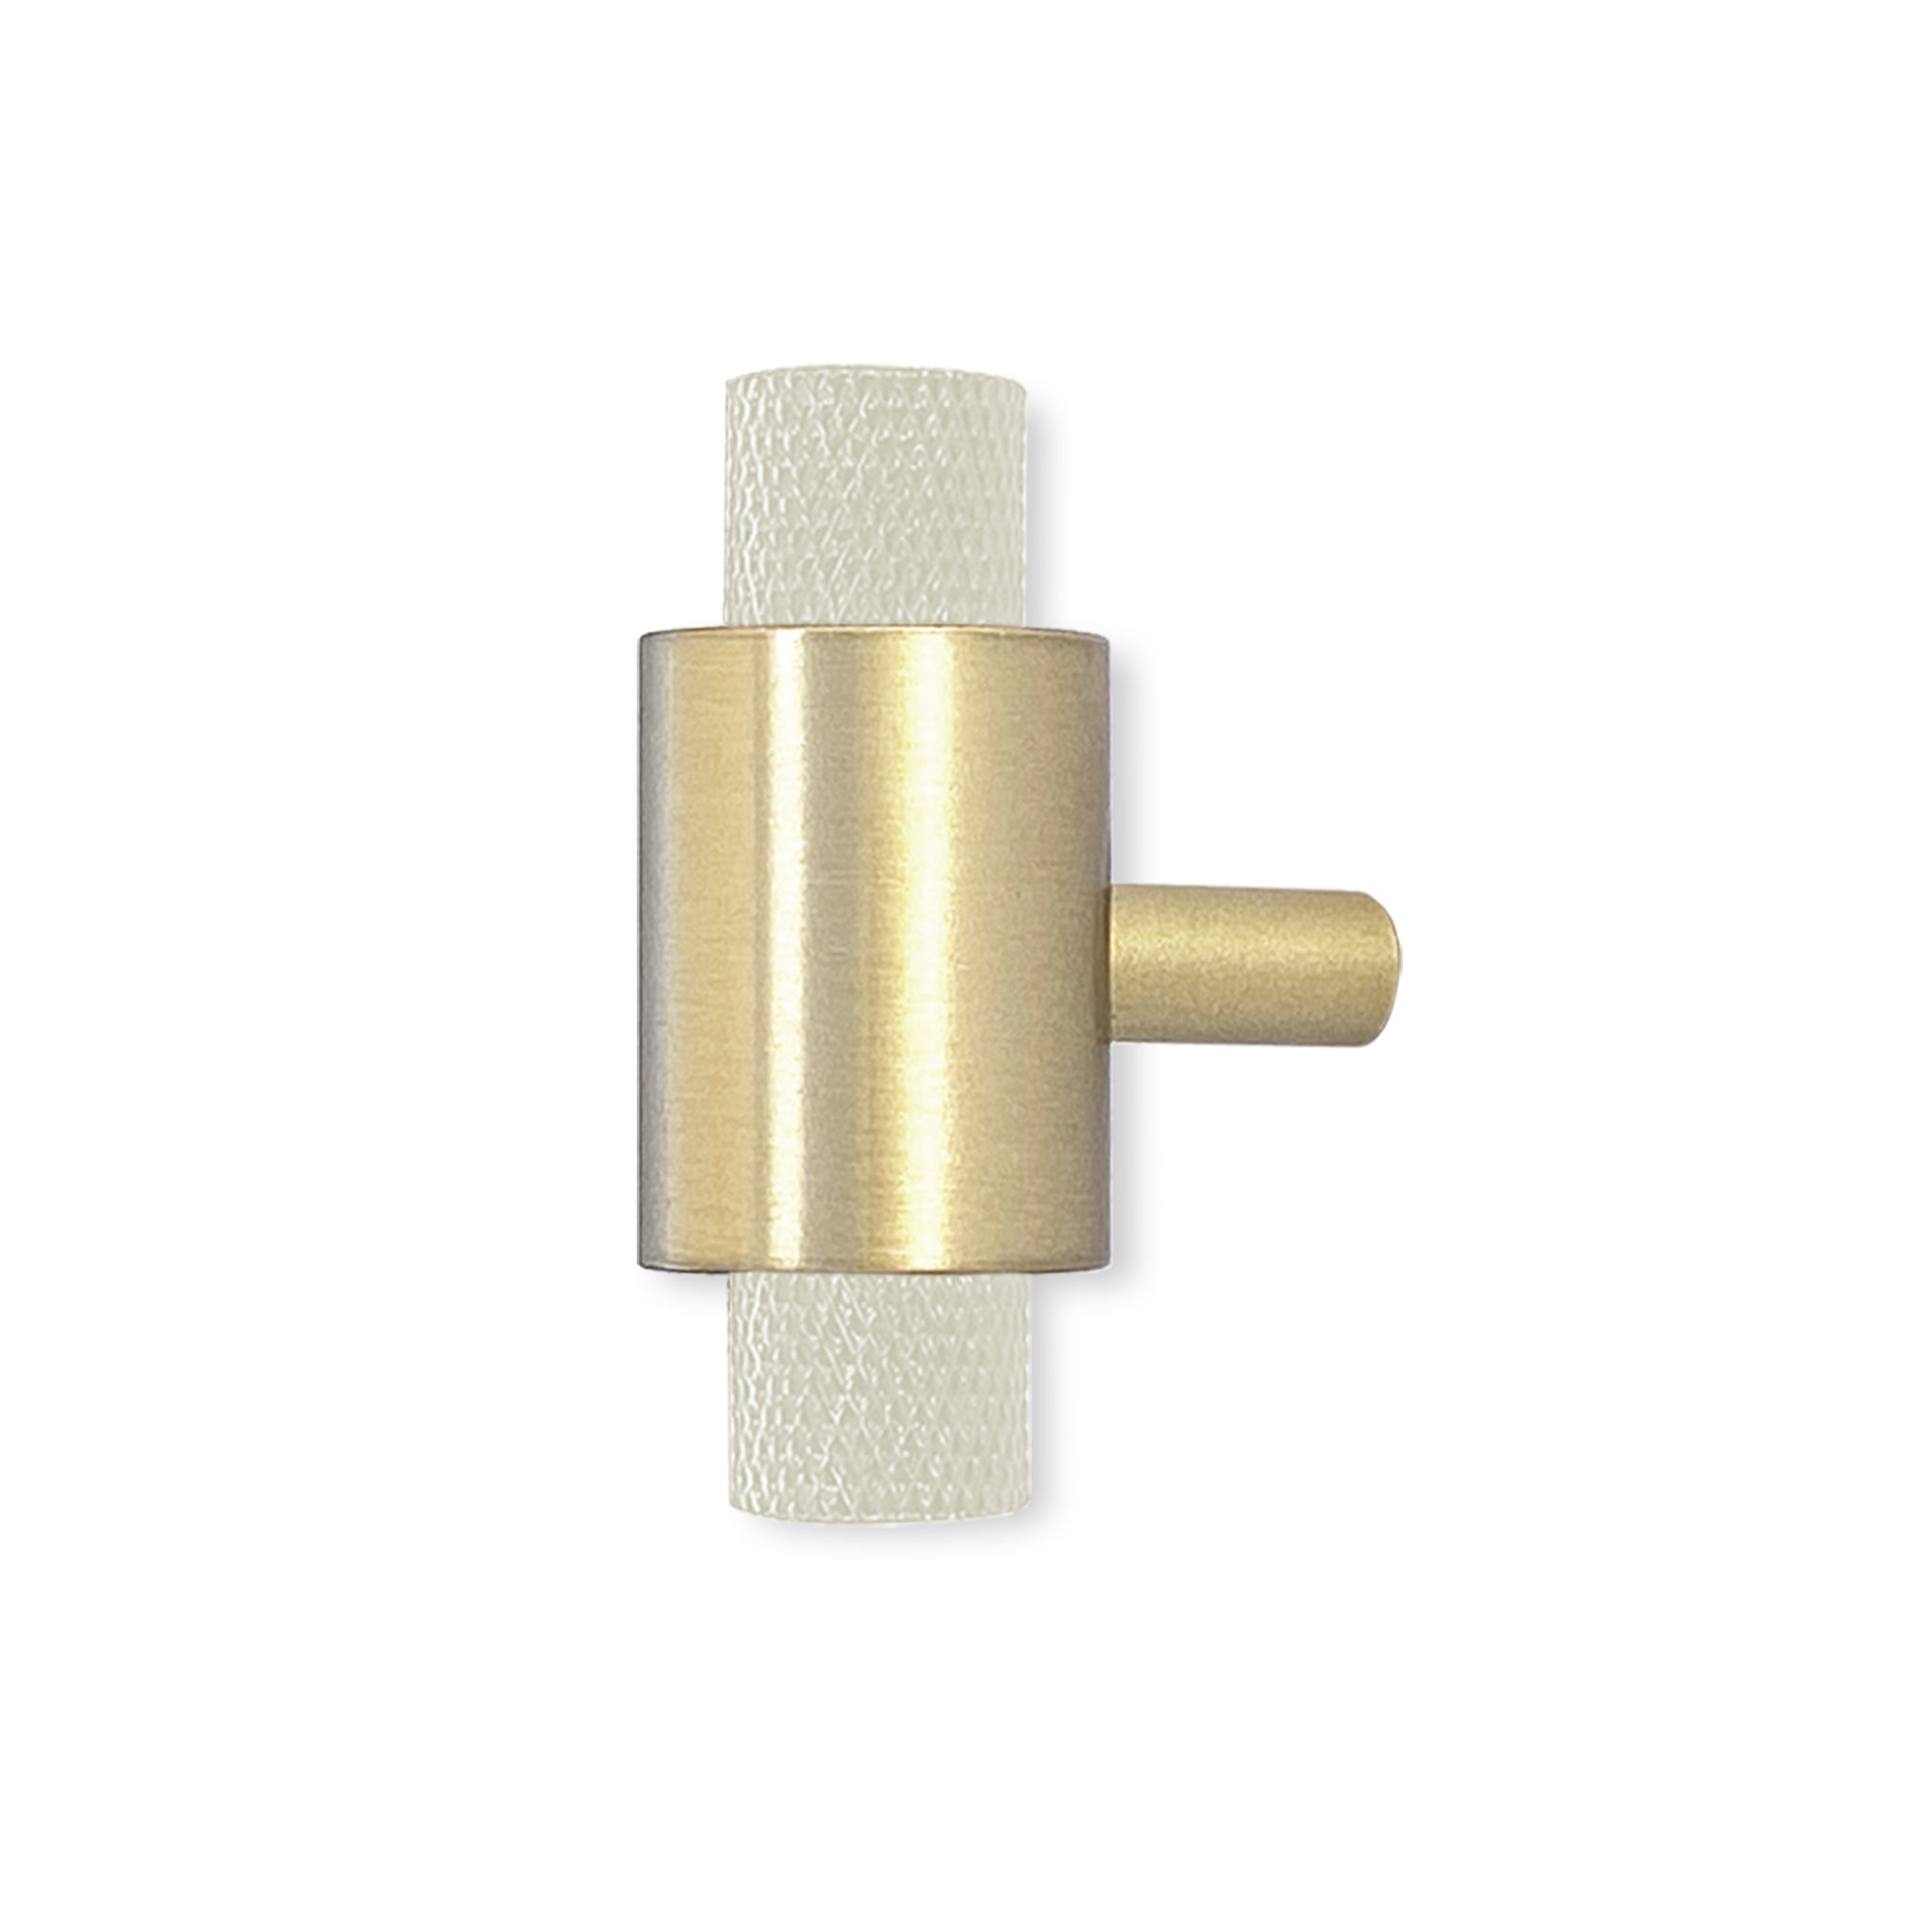 Brass and bone color Tux knob Dutton Brown hardware